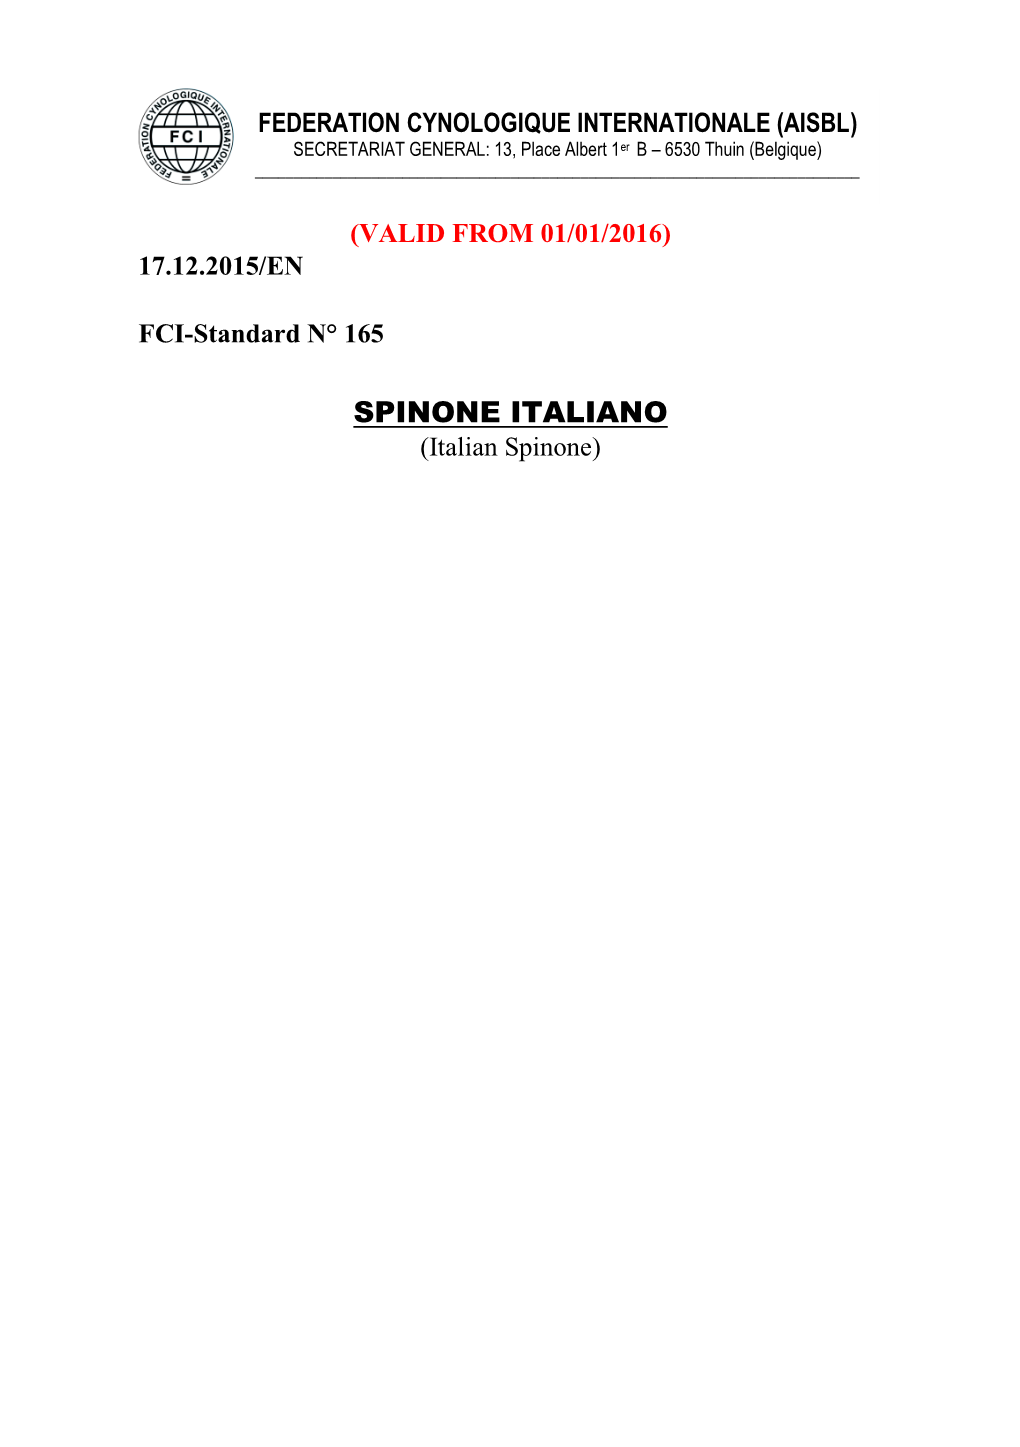 SPINONE ITALIANO (Italian Spinone)